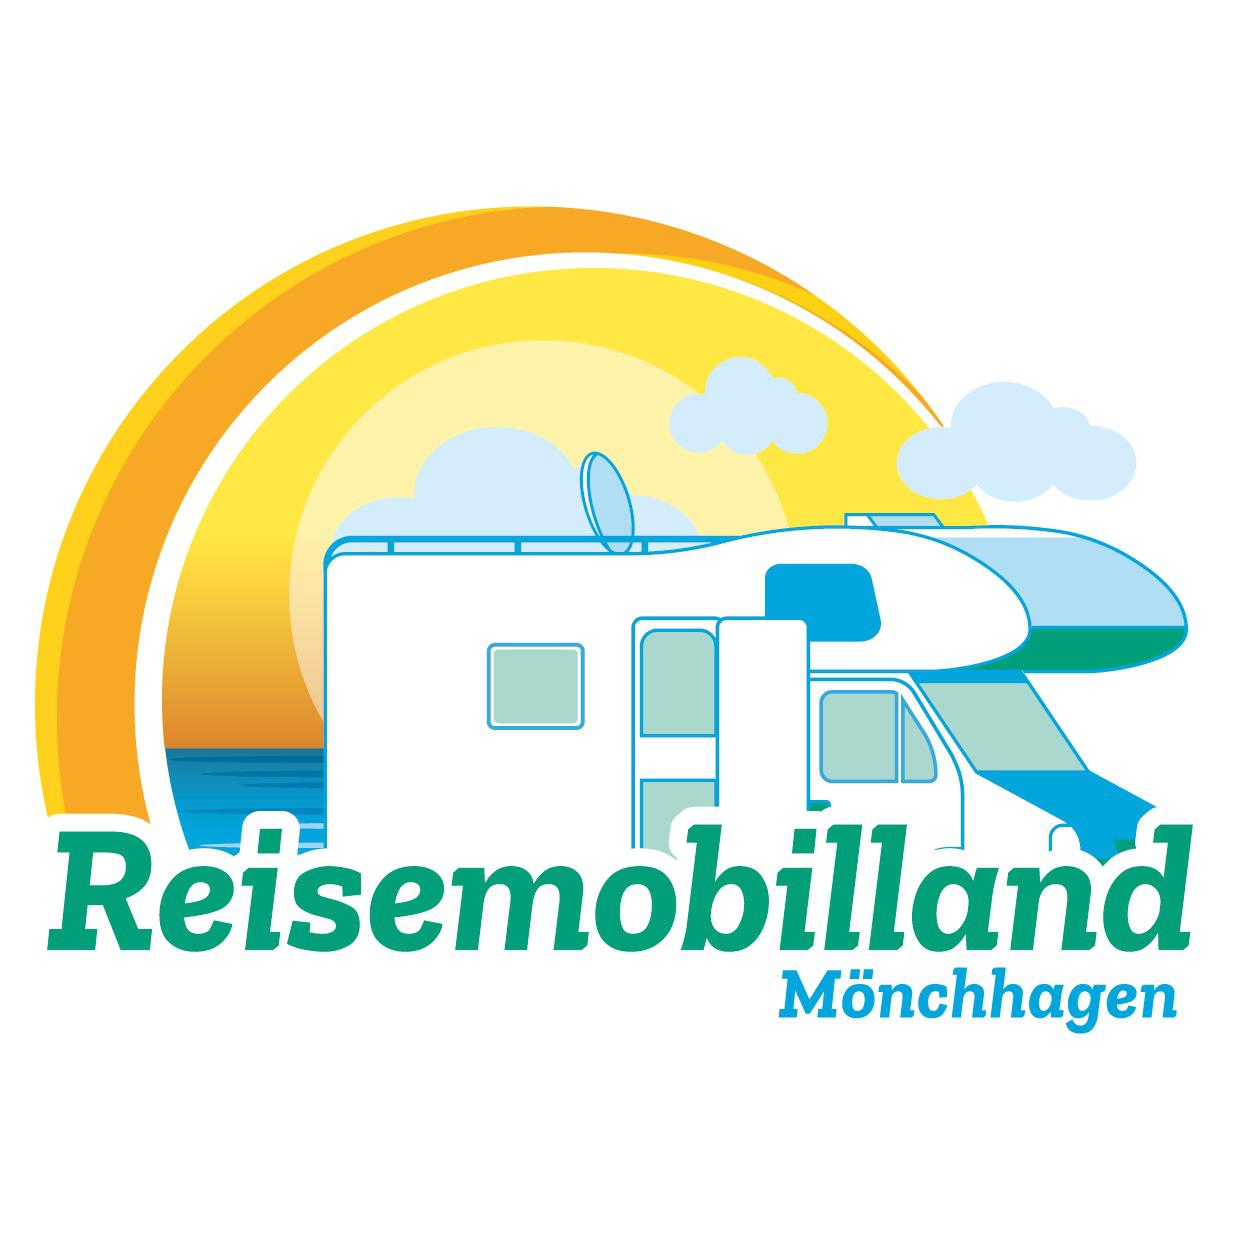 Reisemobilland Mönchhagen Inh. Lars Riemer in Mönchhagen